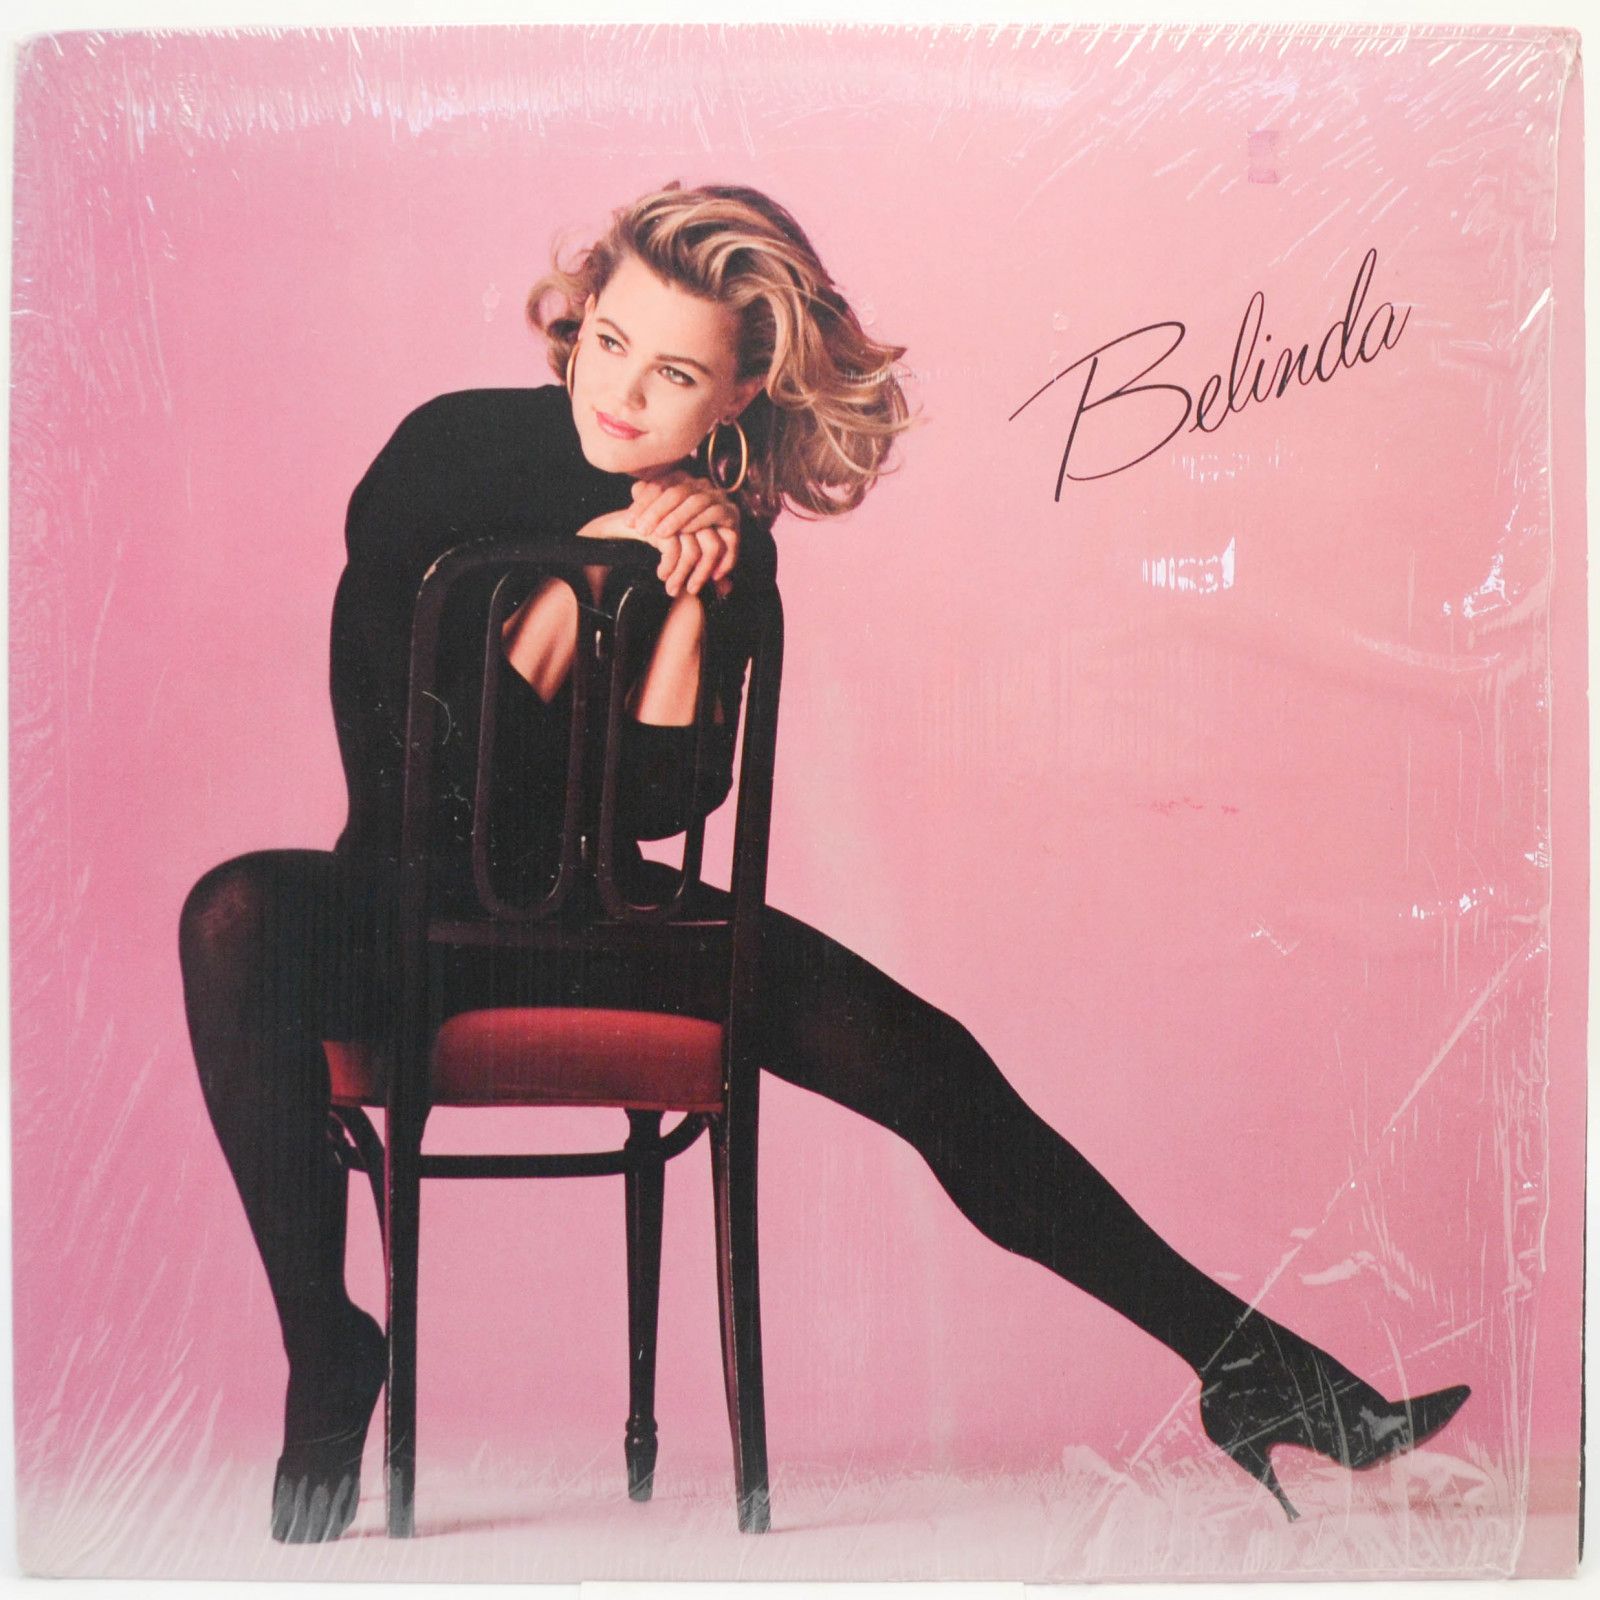 Belinda Carlisle — Belinda (USA), 1986